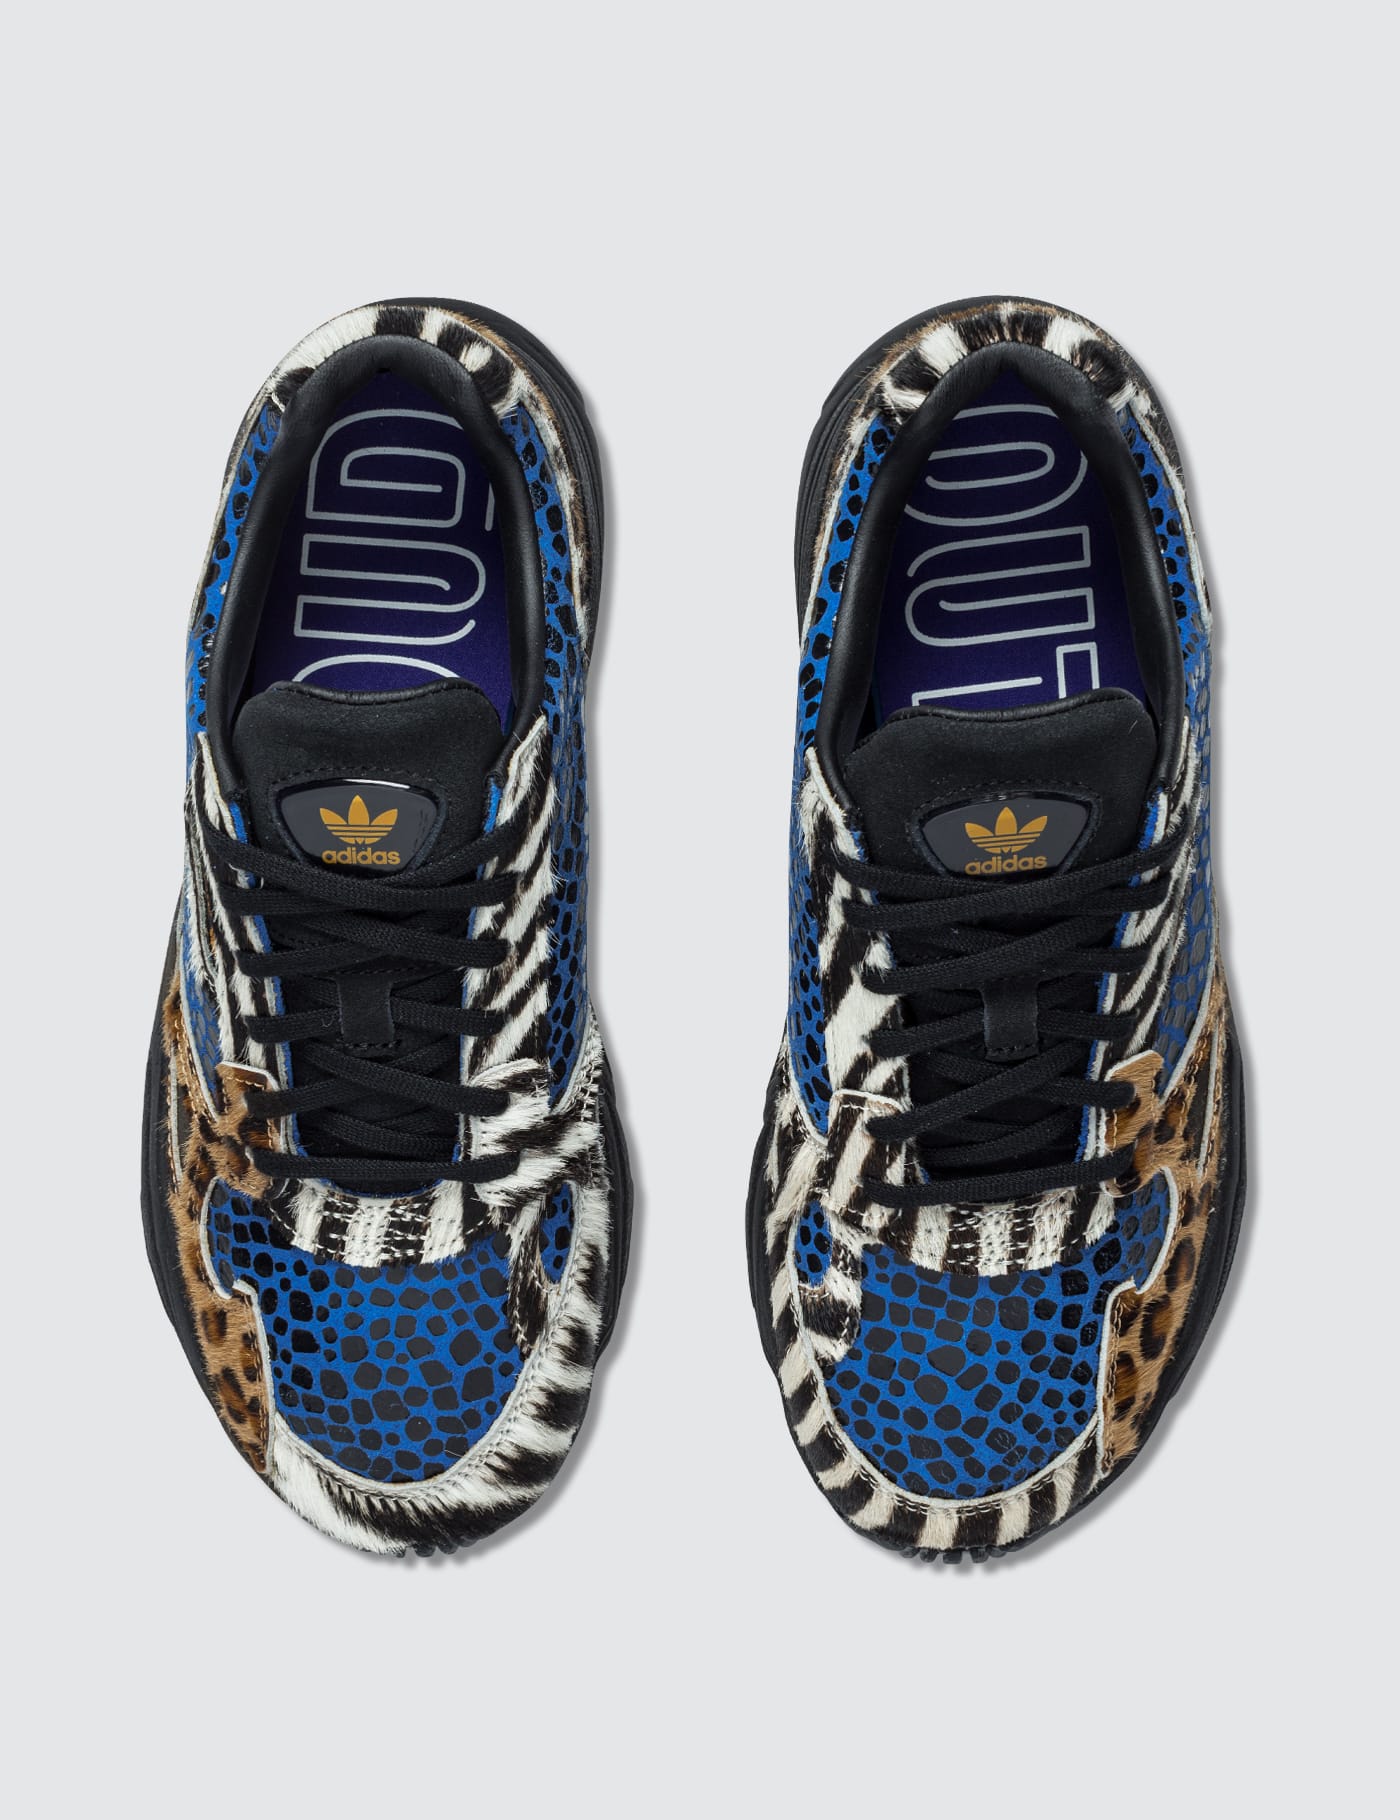 adidas originals falcon trainers in contrast leopard prints